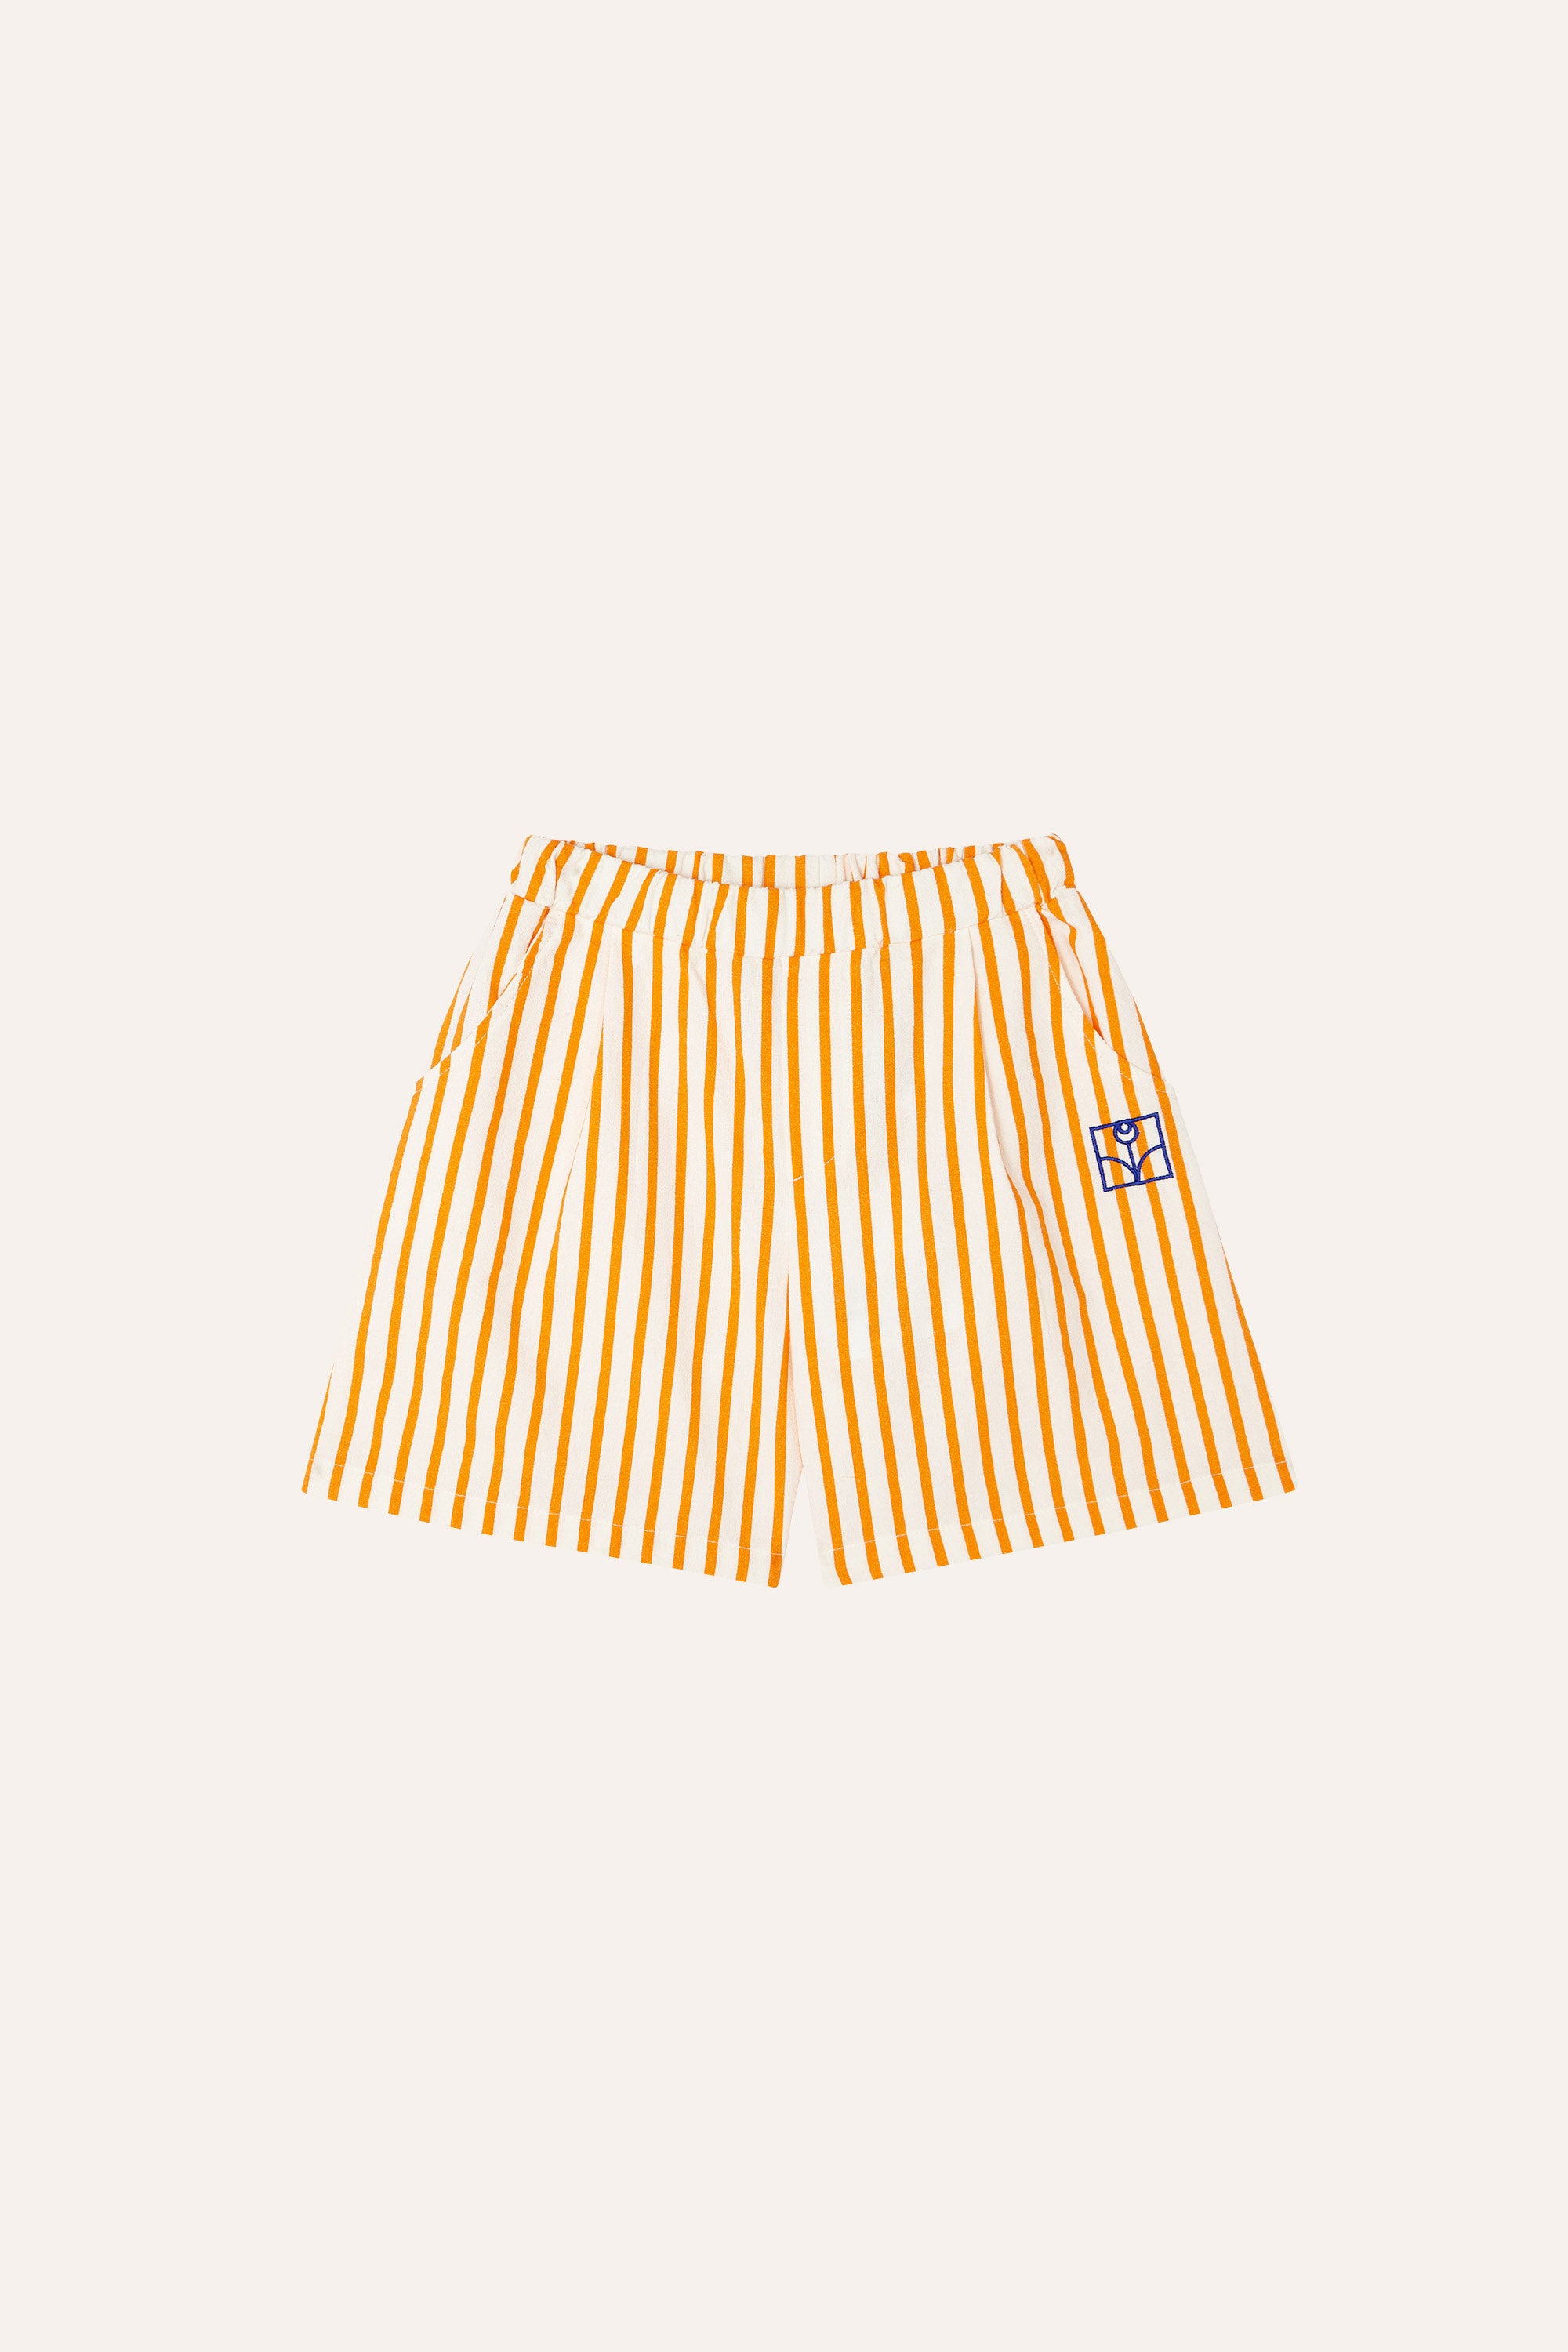 The Campamento - orange sporty kids shorts